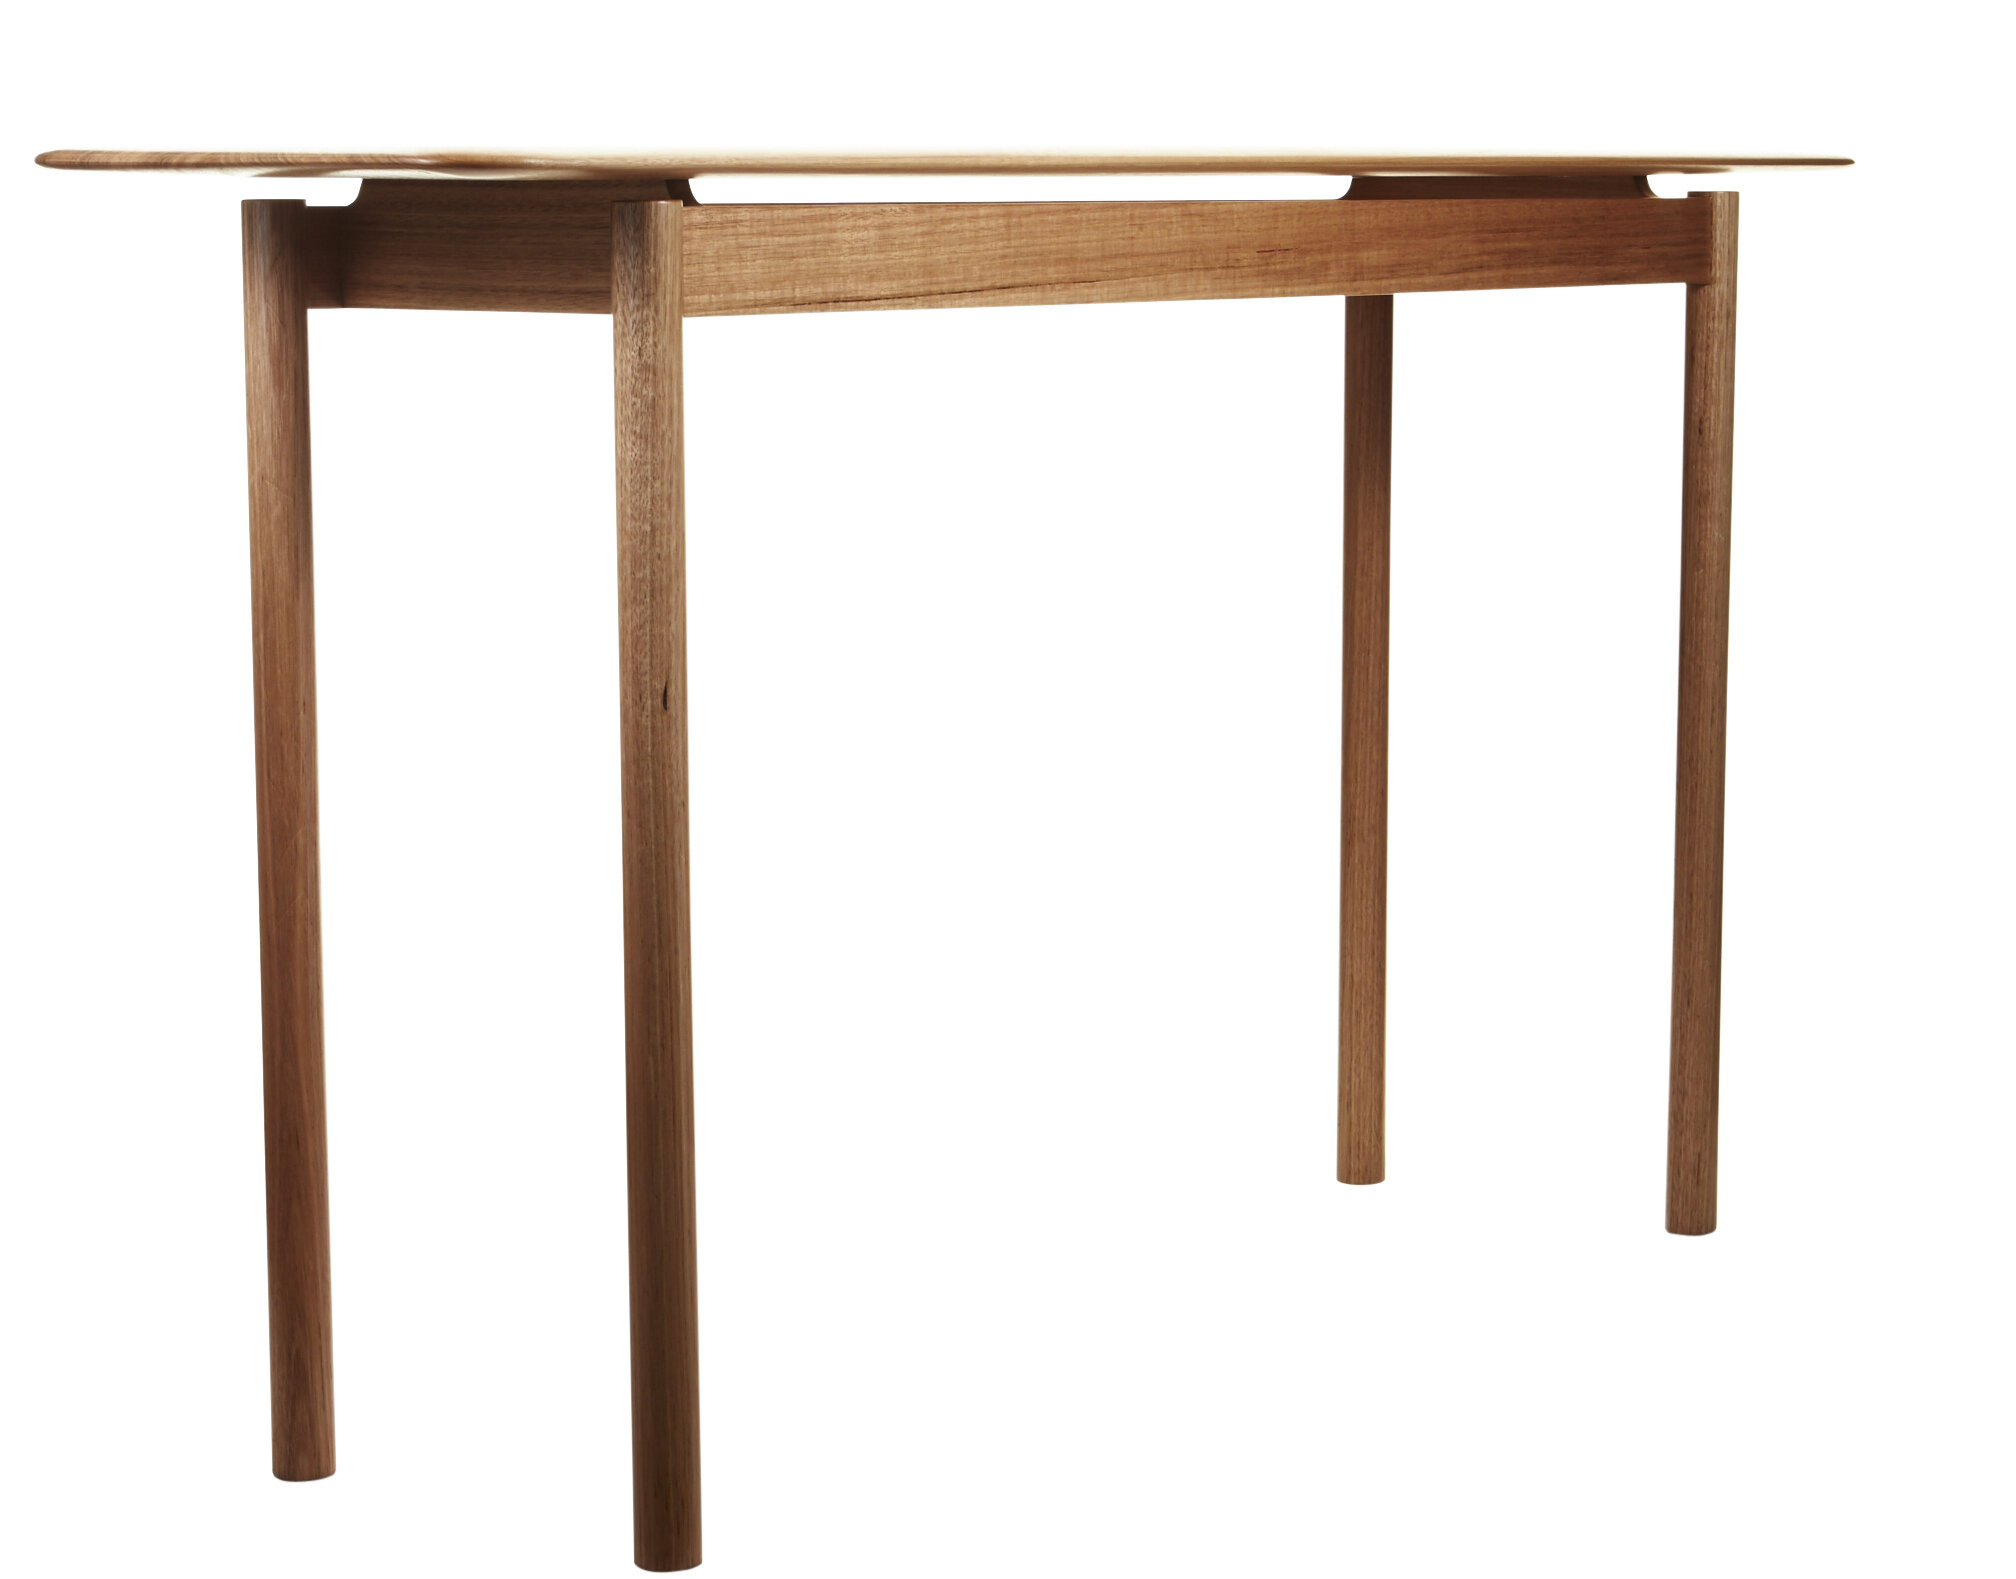 Andrew-table-130515 12.jpg